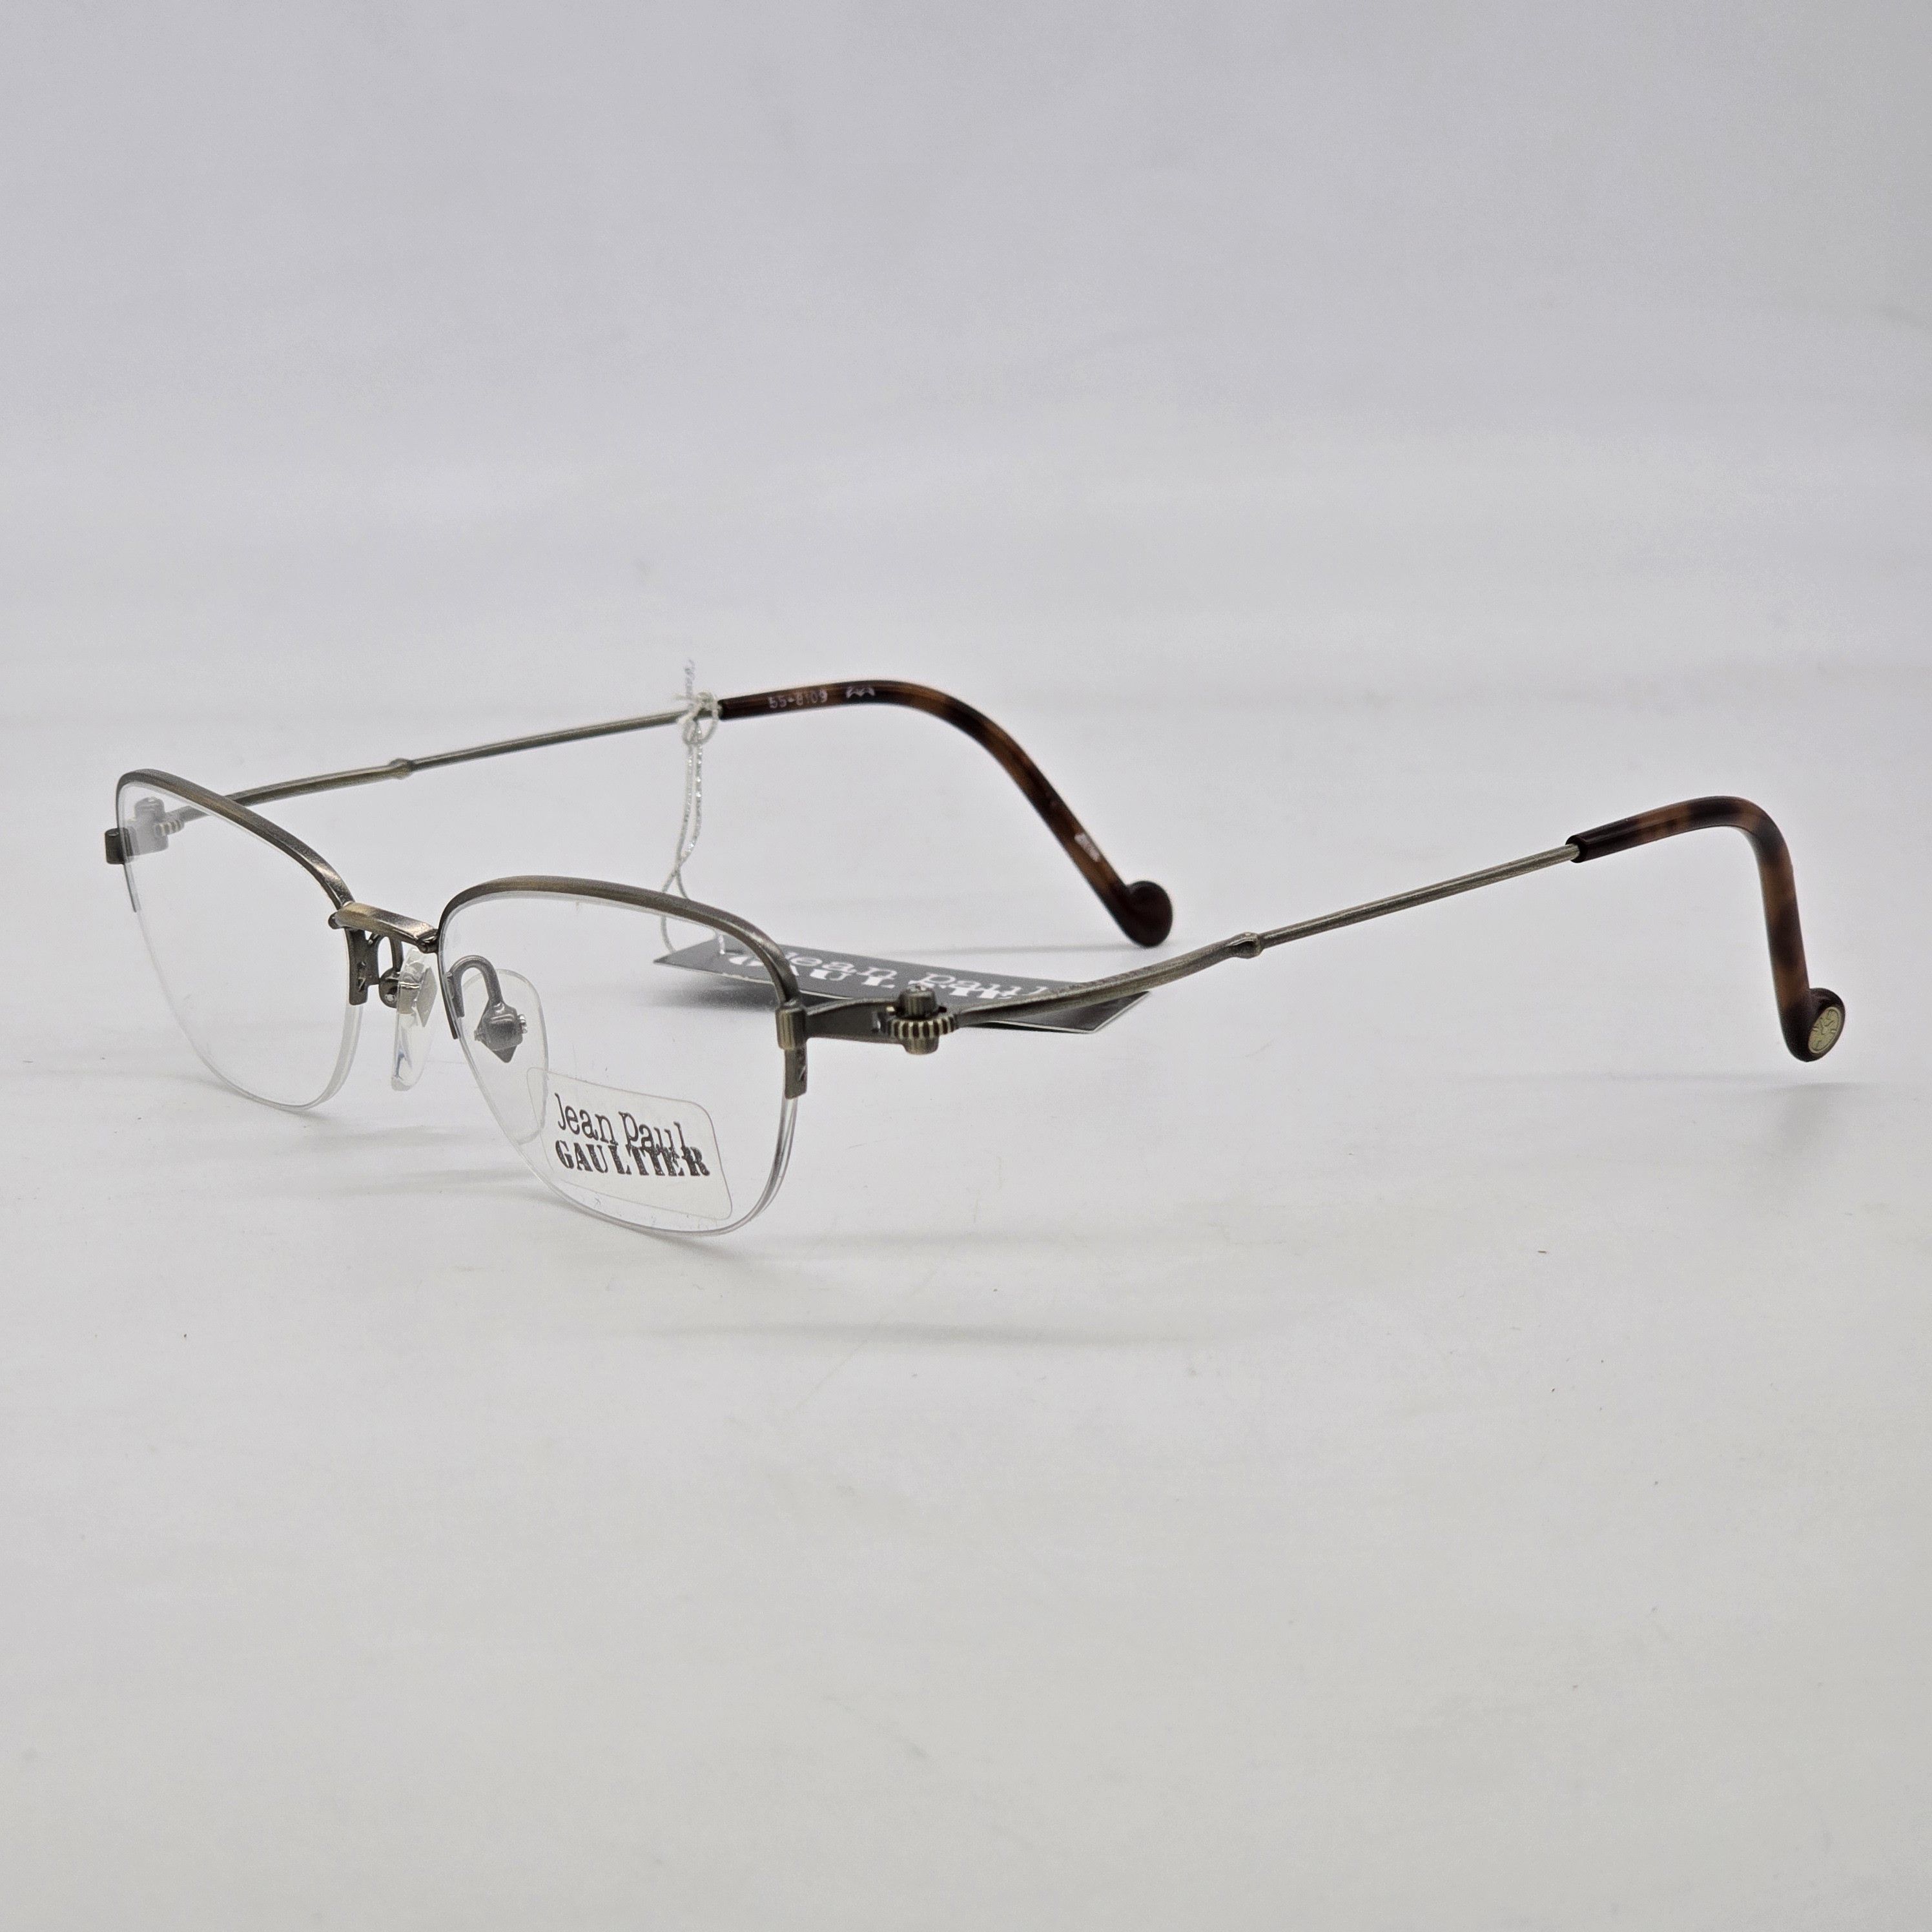 Vintage - Jean Paul Gaultier - 90s Half-Rim Clockwork Glasses - 1